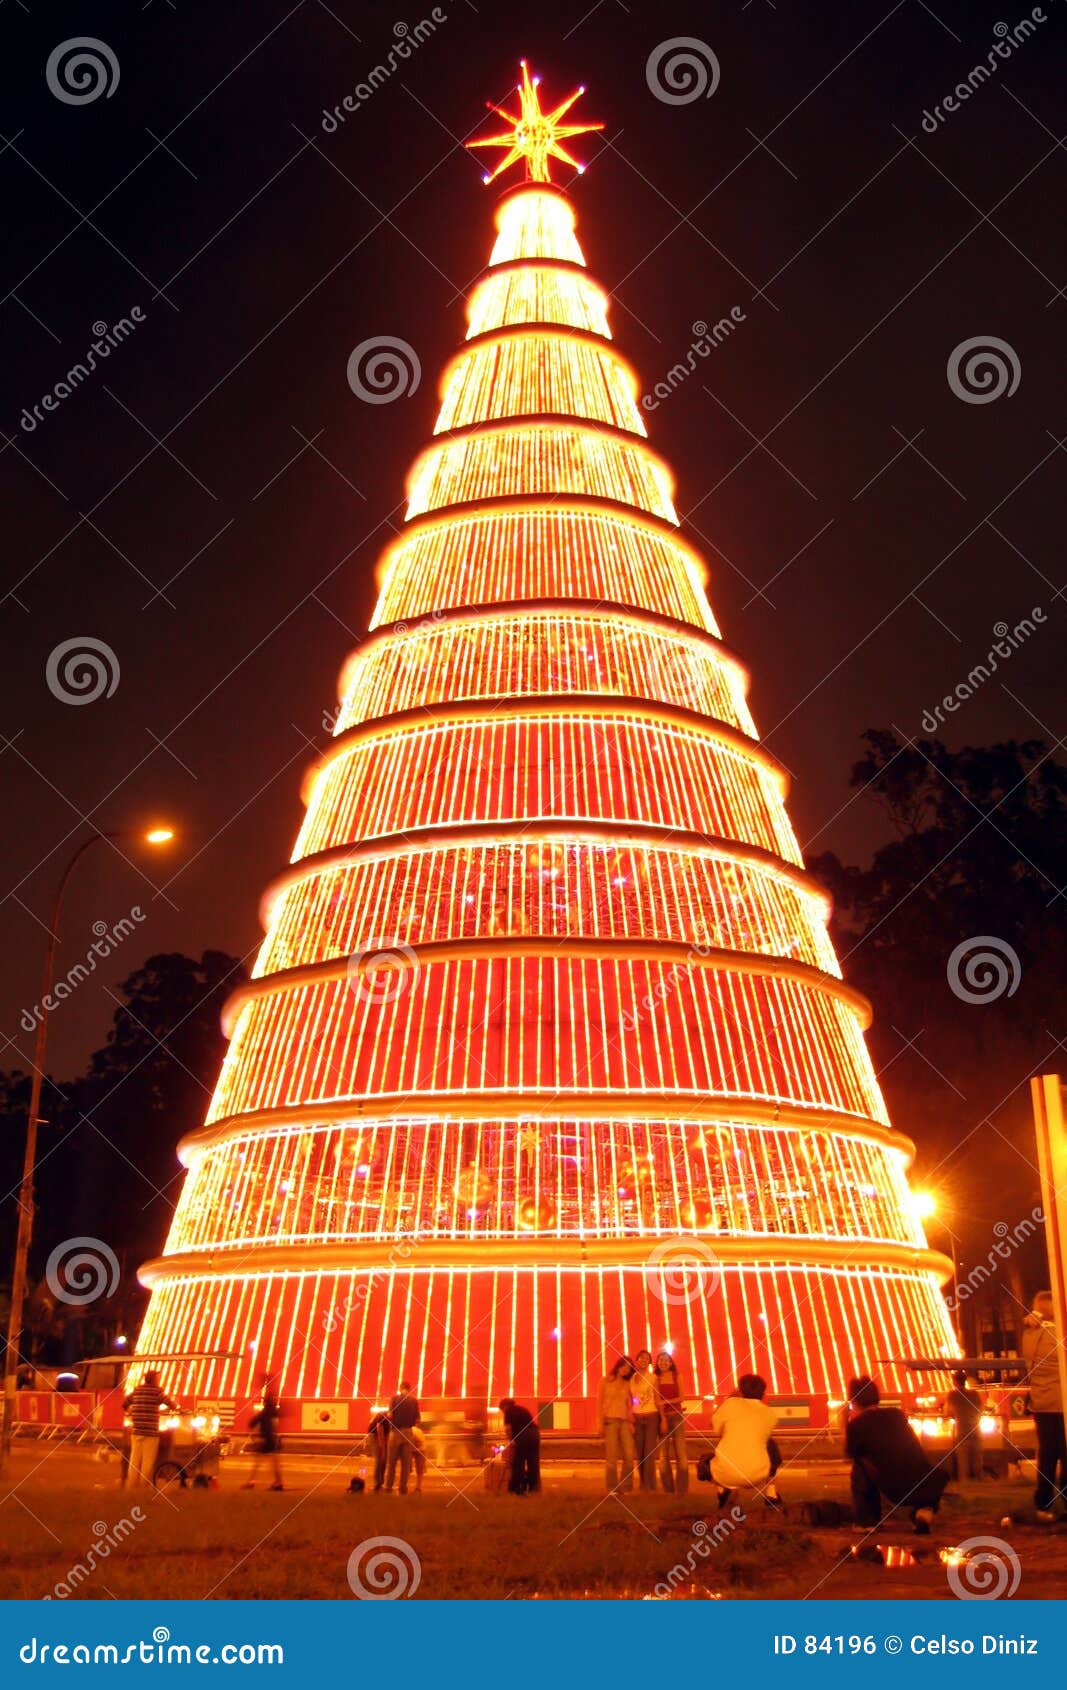 gigantic christmas tree at night